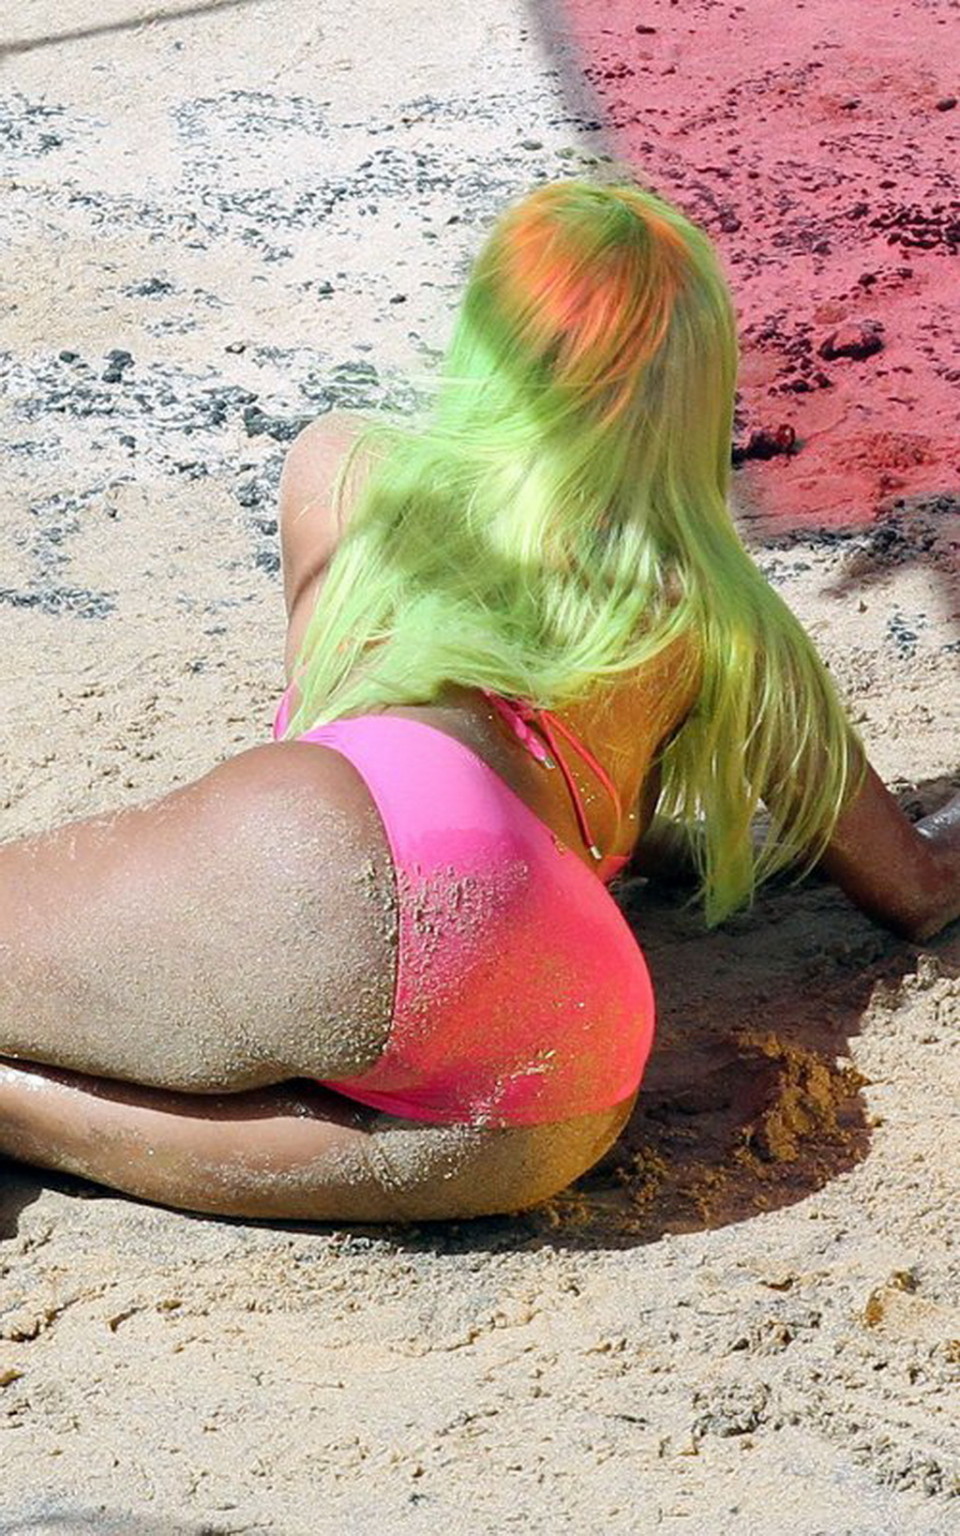 Nicki minaj luce un bikini en el set del video musical en hawaii
 #75270156